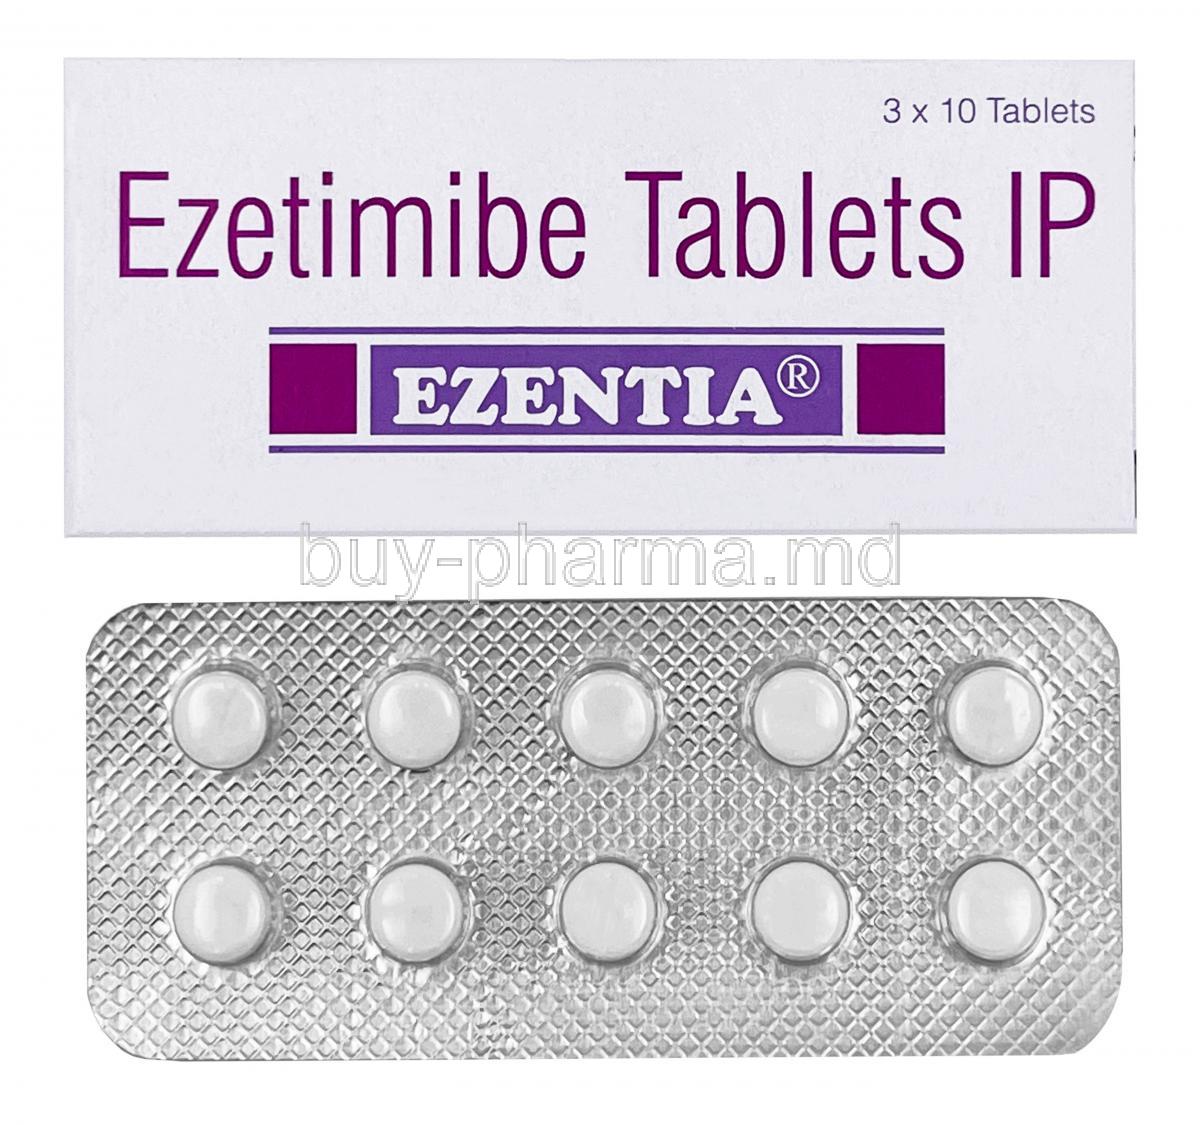 Ezentia, Ezetimibe 10 mg, Sun Pharma, Box, Blisterpack